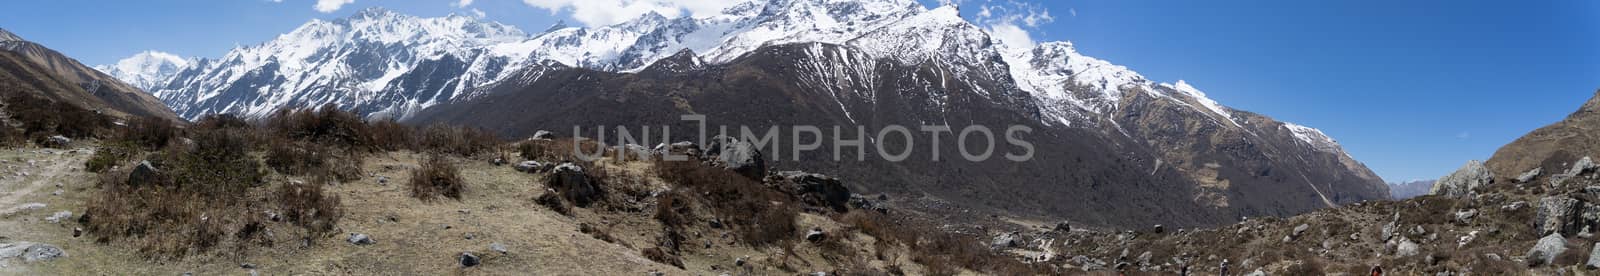 Langtand valley trekking mountain in Nepal  by javax